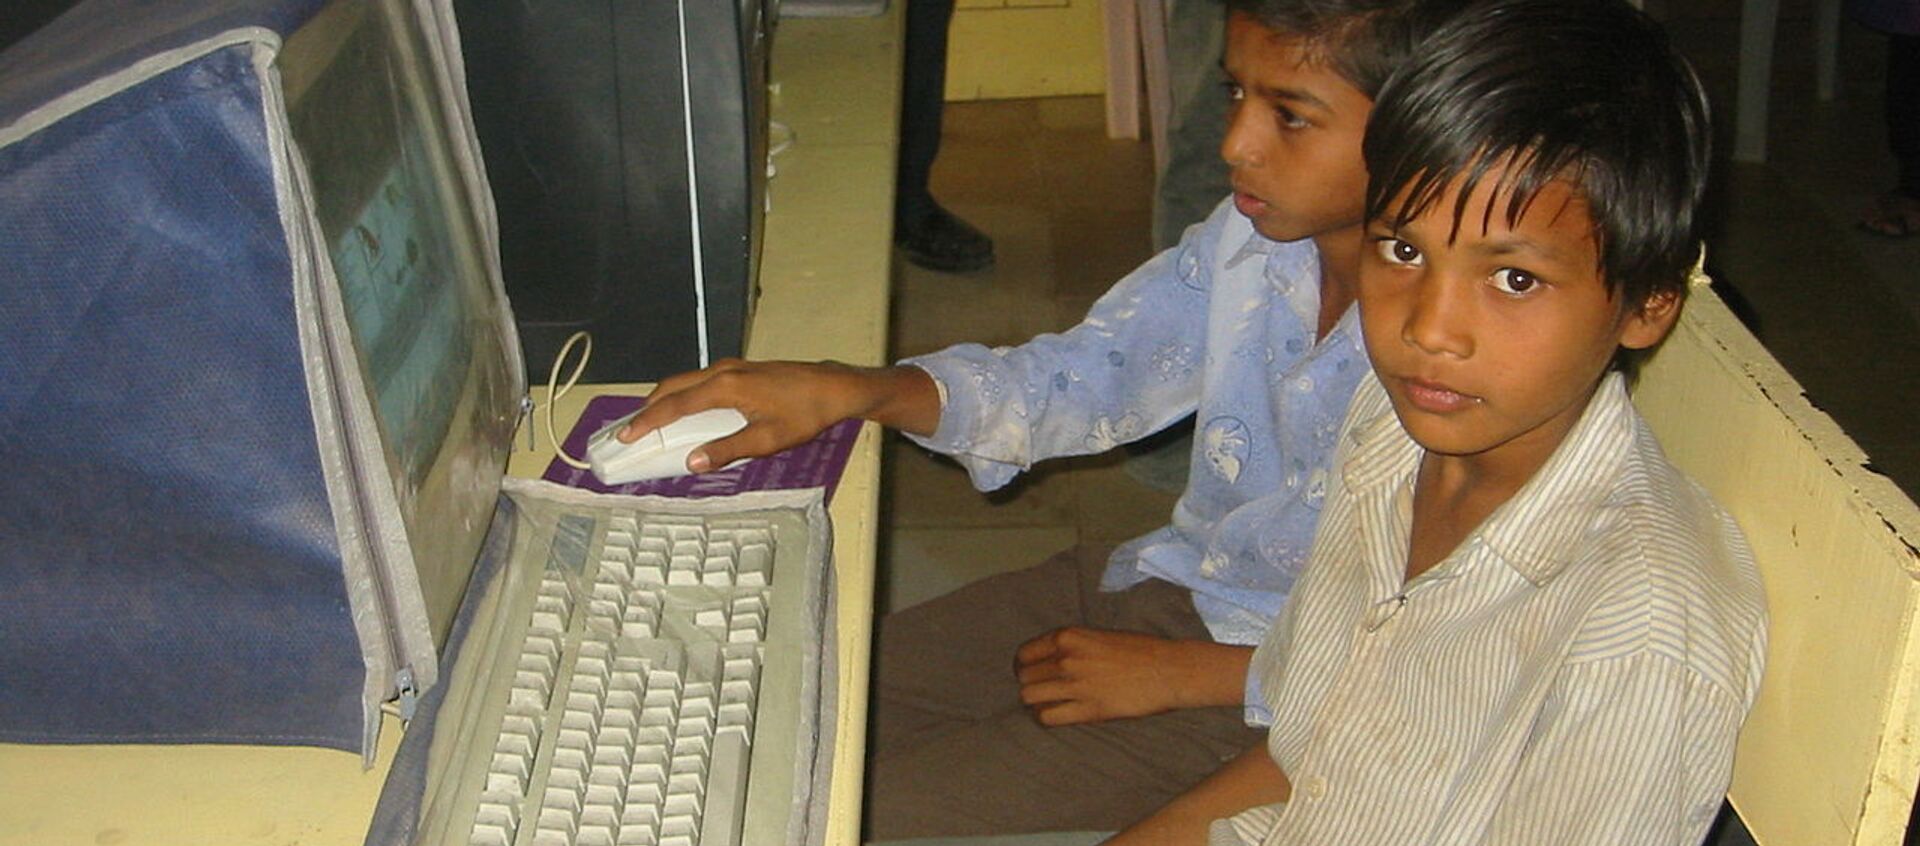 Computer education boys Gujarat - Sputnik International, 1920, 22.06.2020